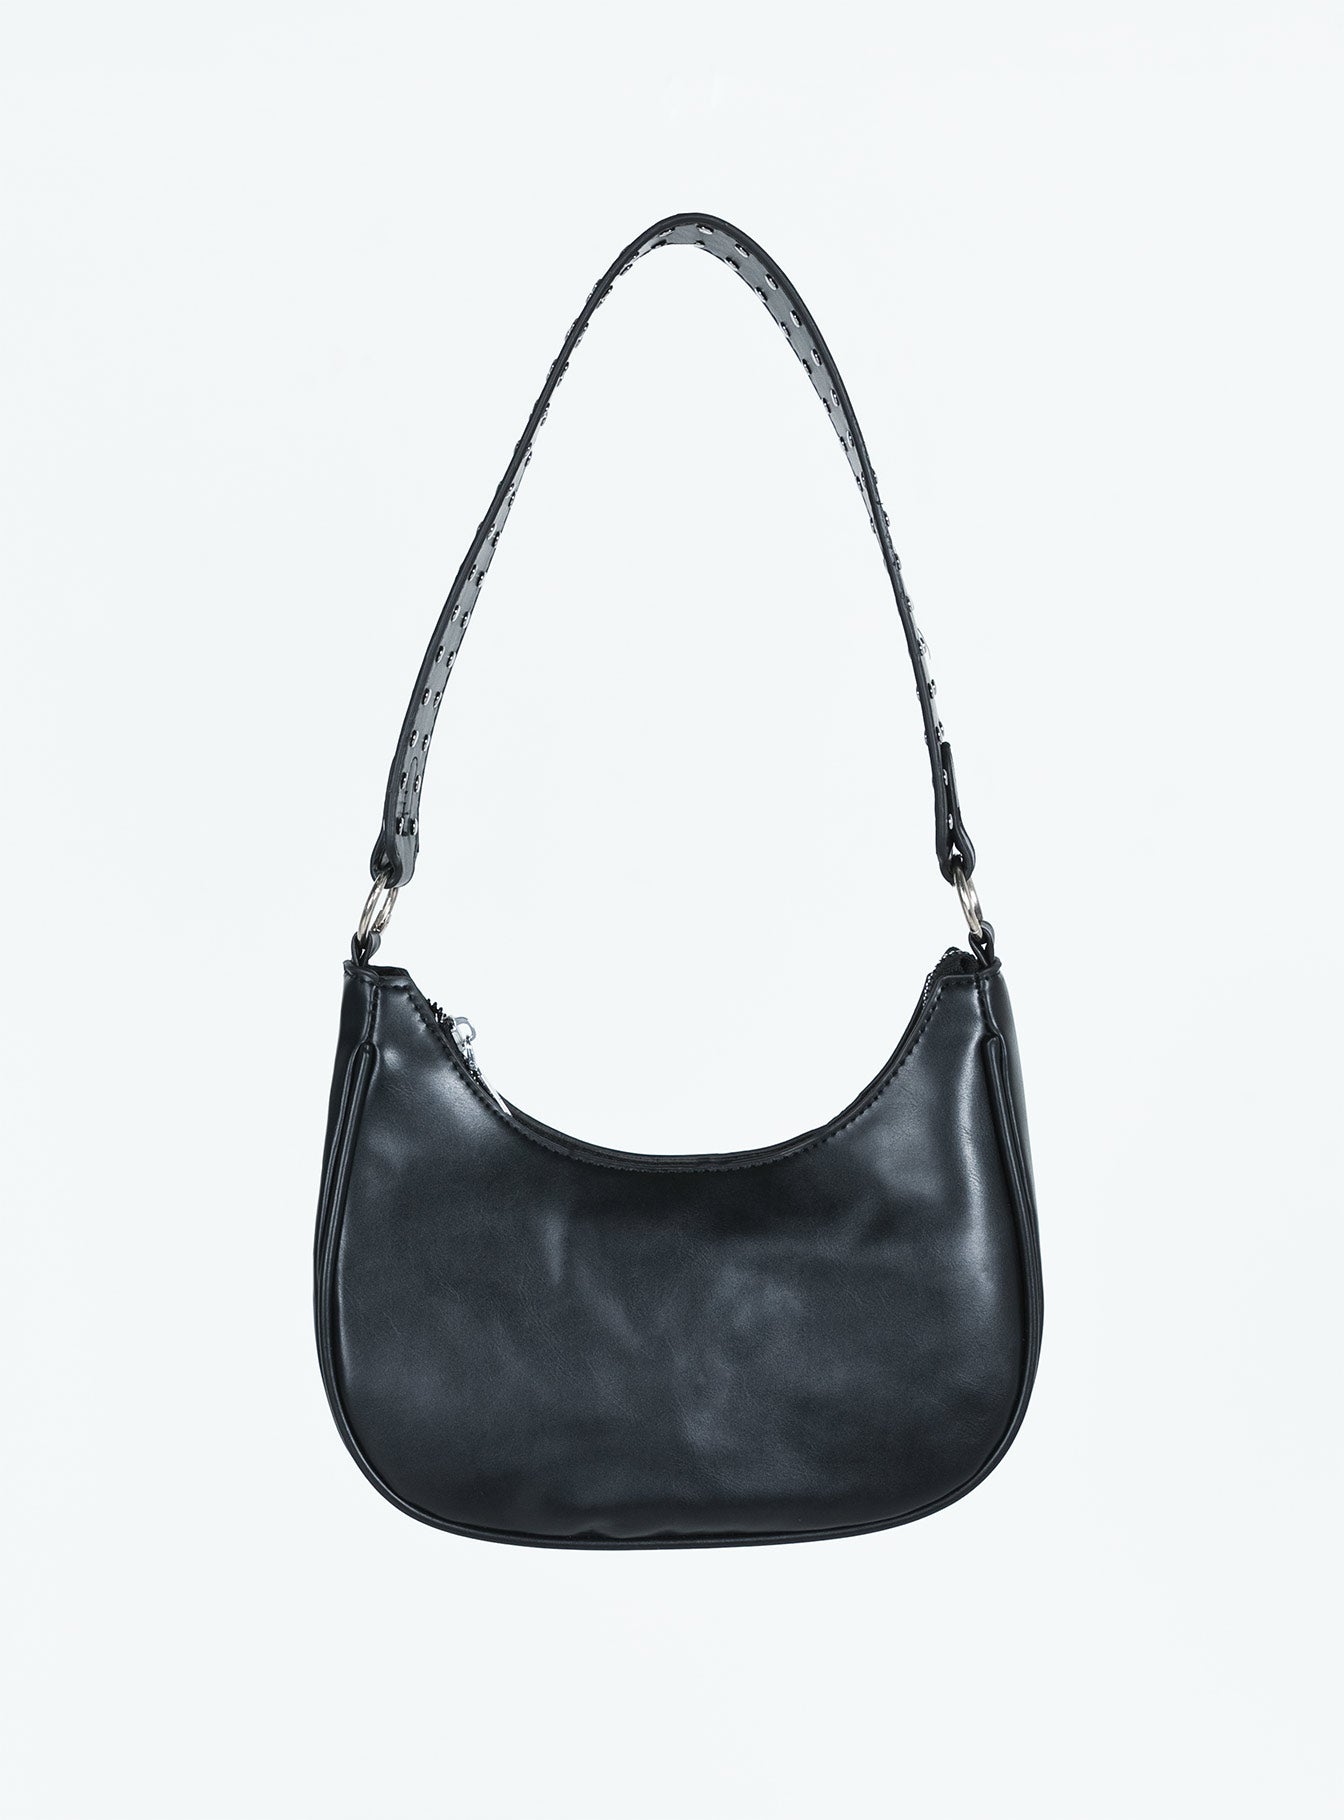 Allzedream Purse Straps Replacement Crossbody Bags Handbag Wide Canvas  Leather Adjustable (Black, Silver Hardware) : Amazon.in: Shoes & Handbags